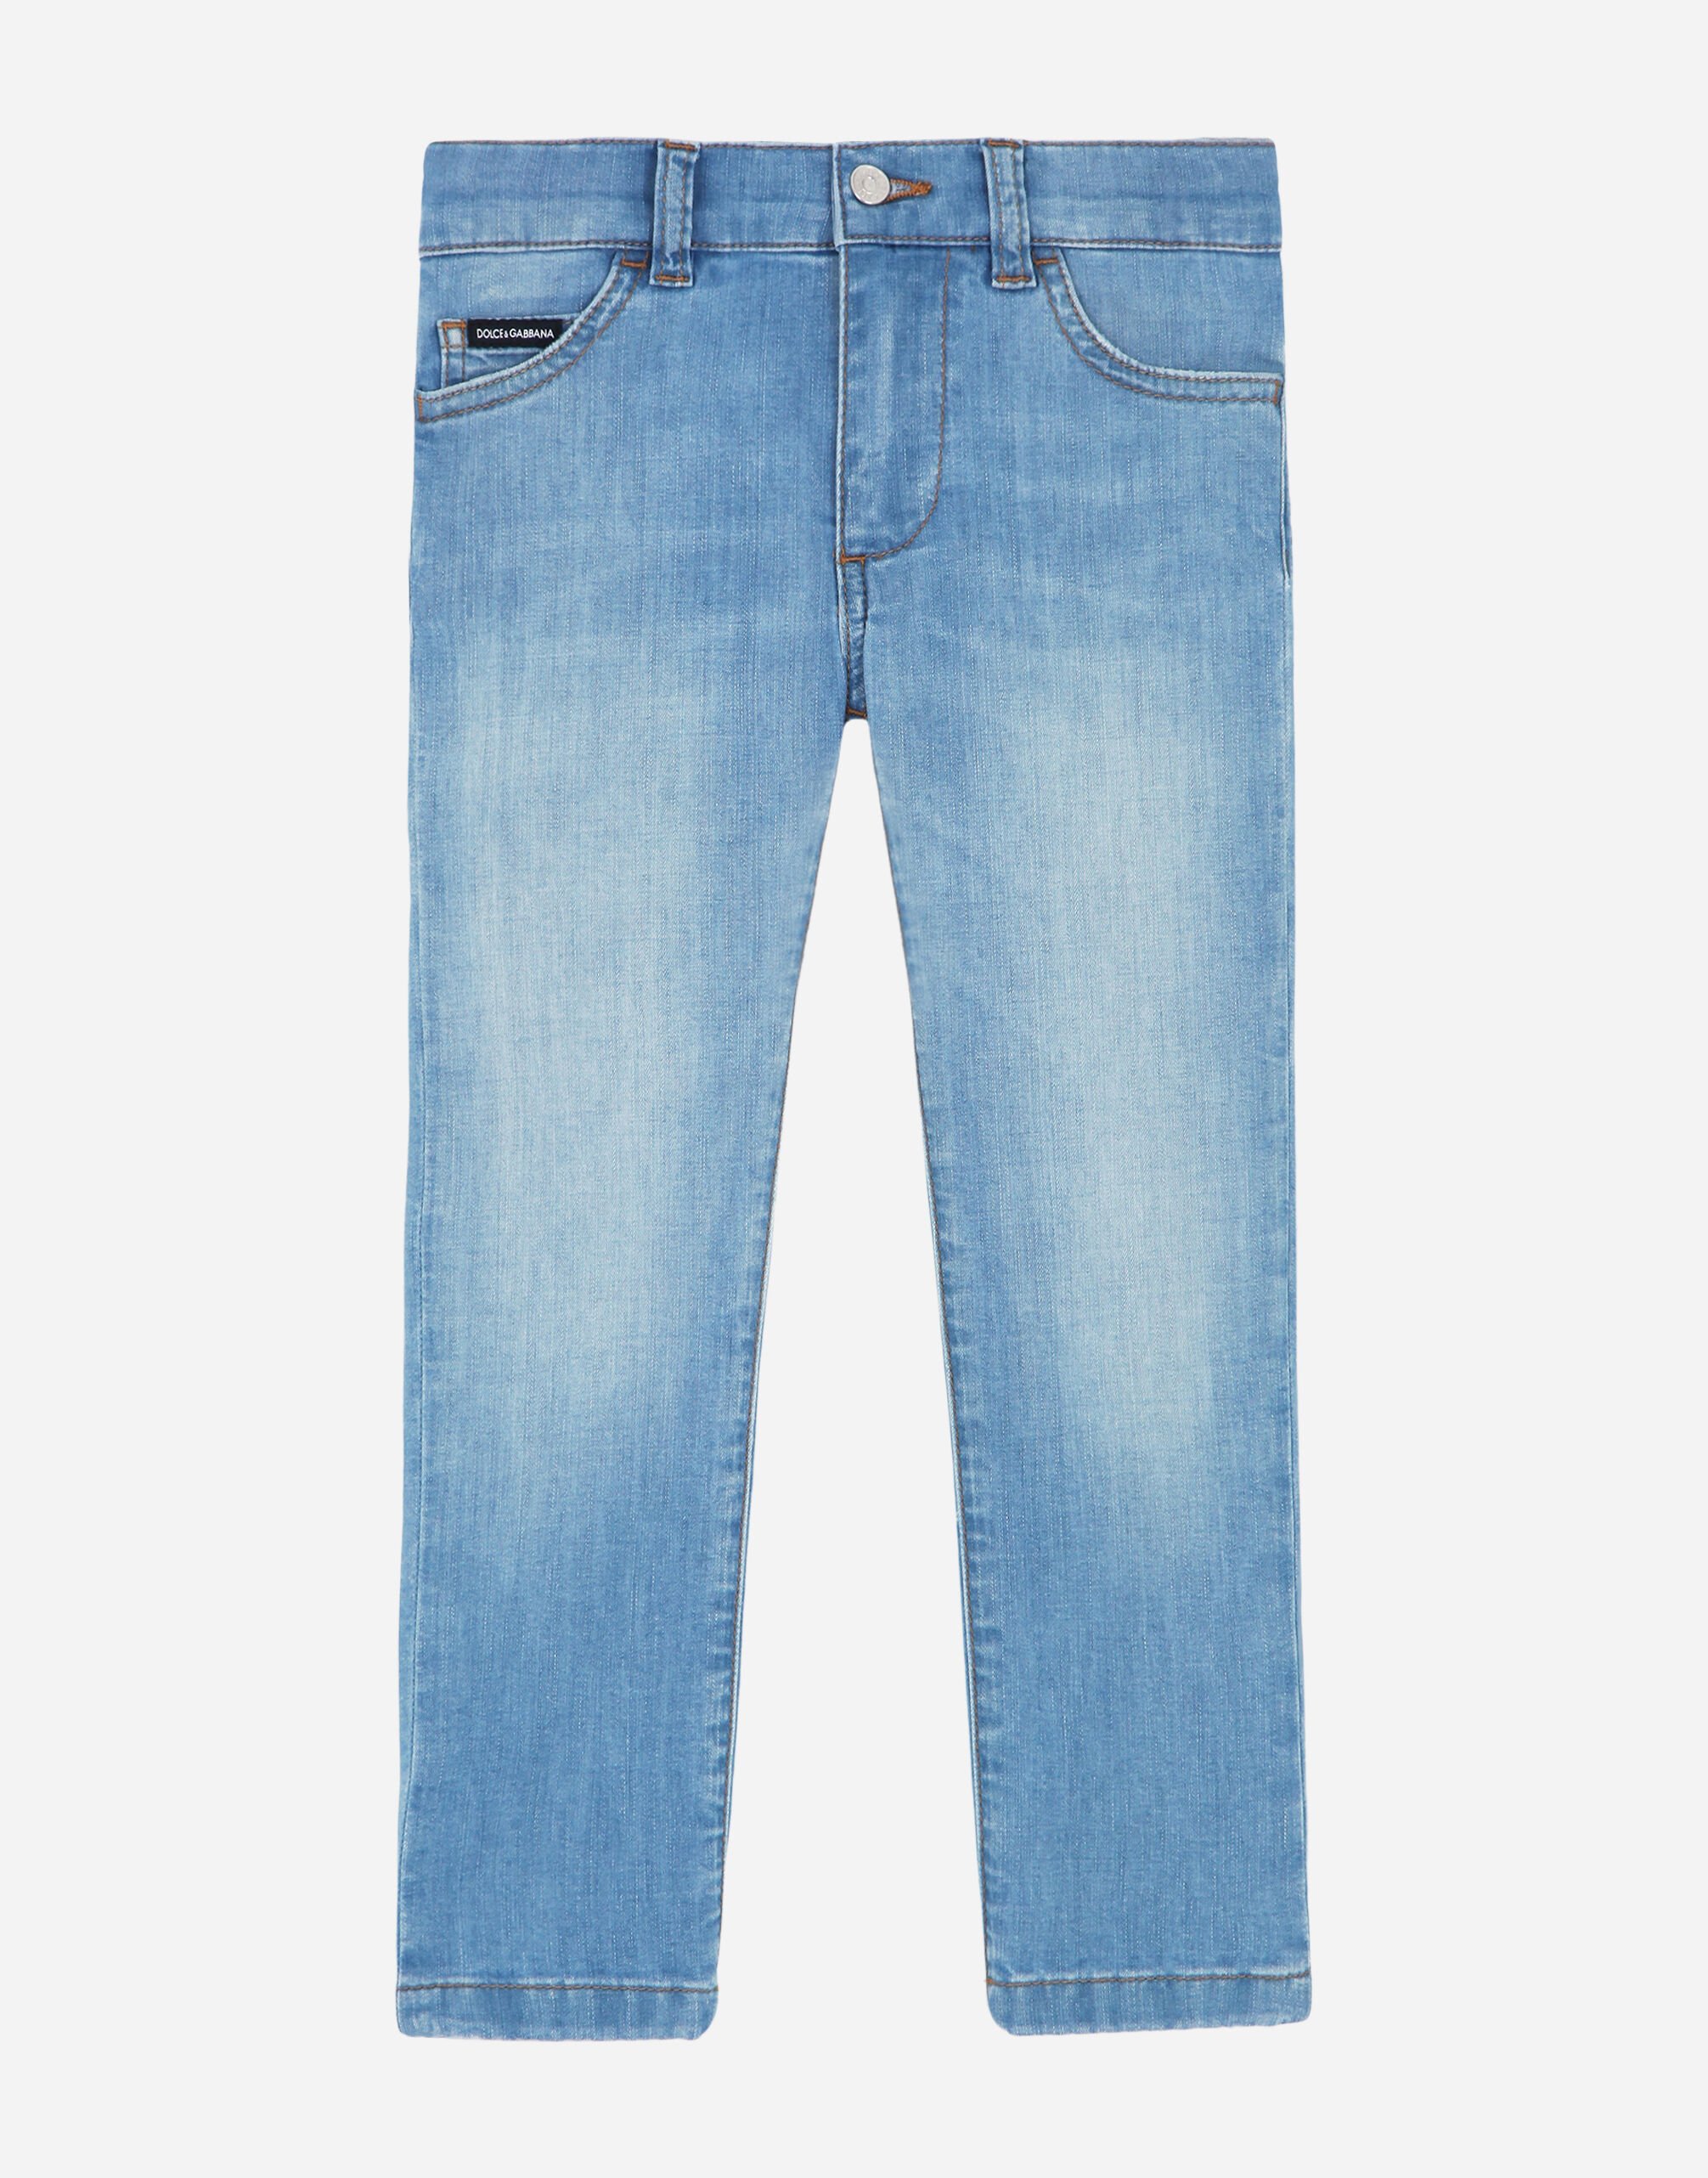 Dolce&Gabbana Stretch slim fit baby blue jeans Multicolor L44P32HJMPB